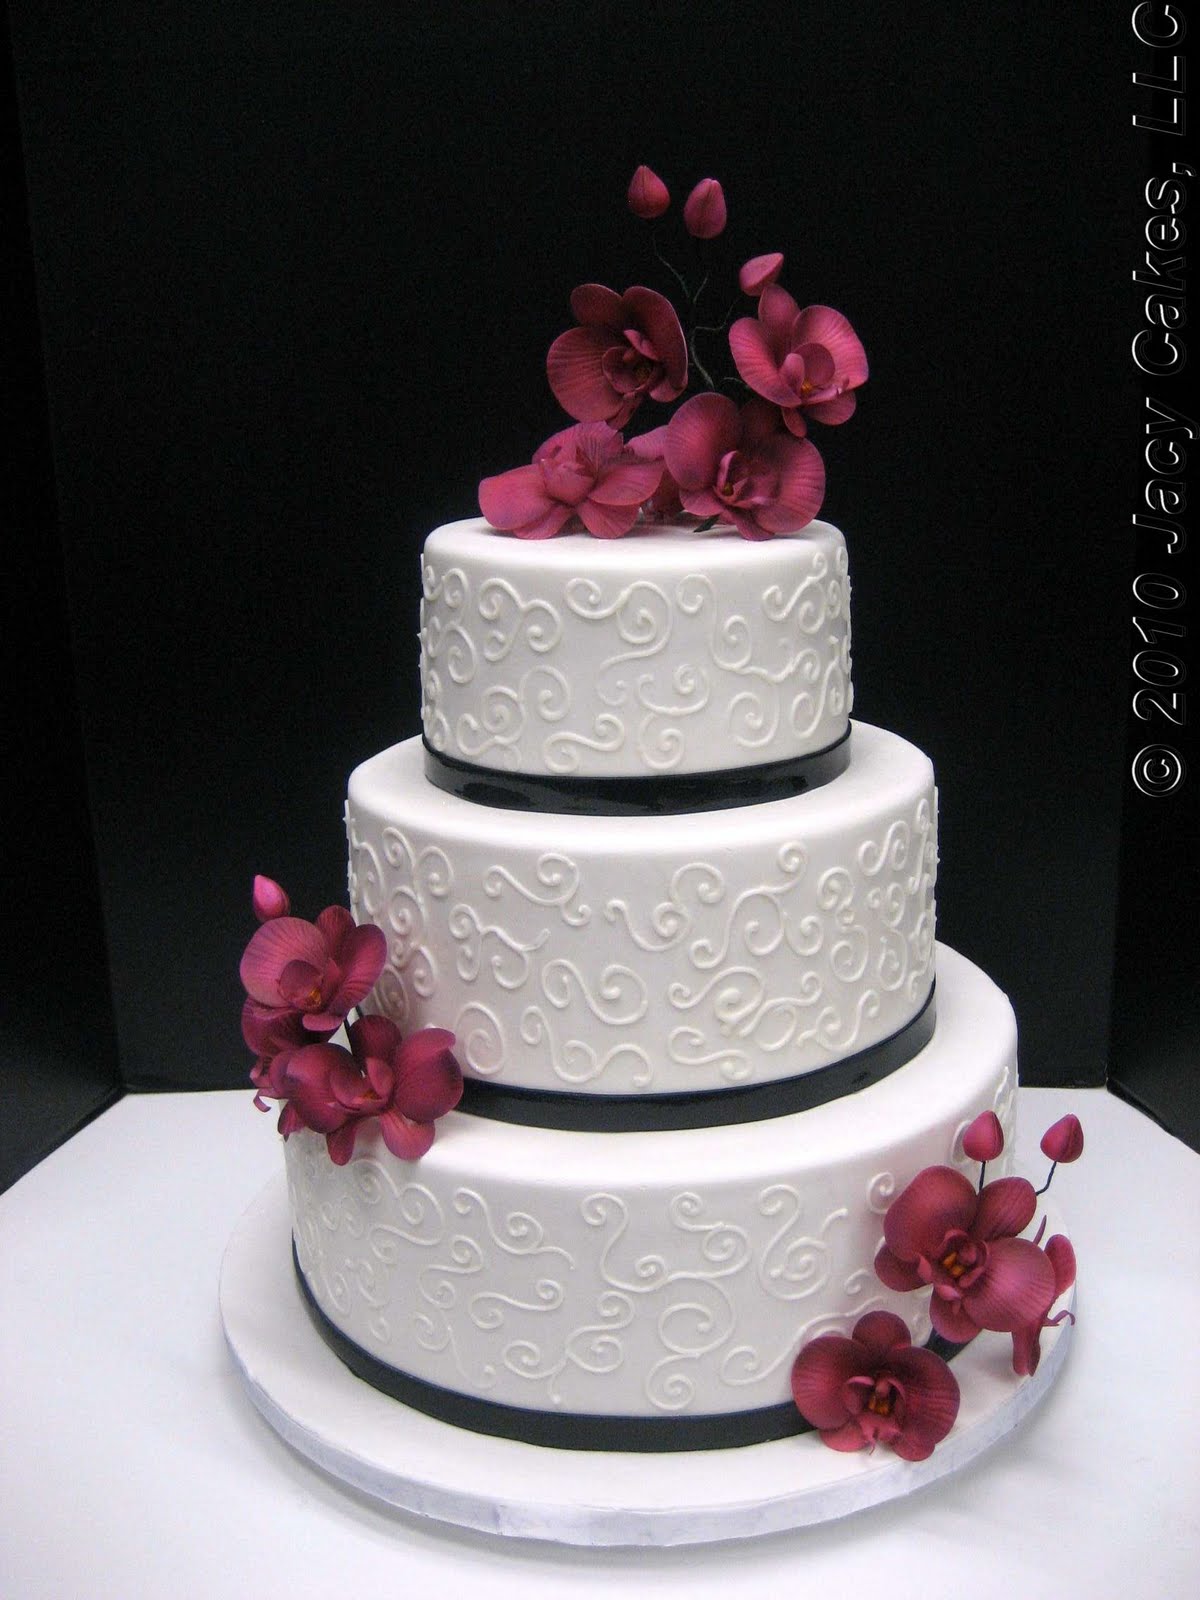 3 Tier Wedding Cake Designs 3